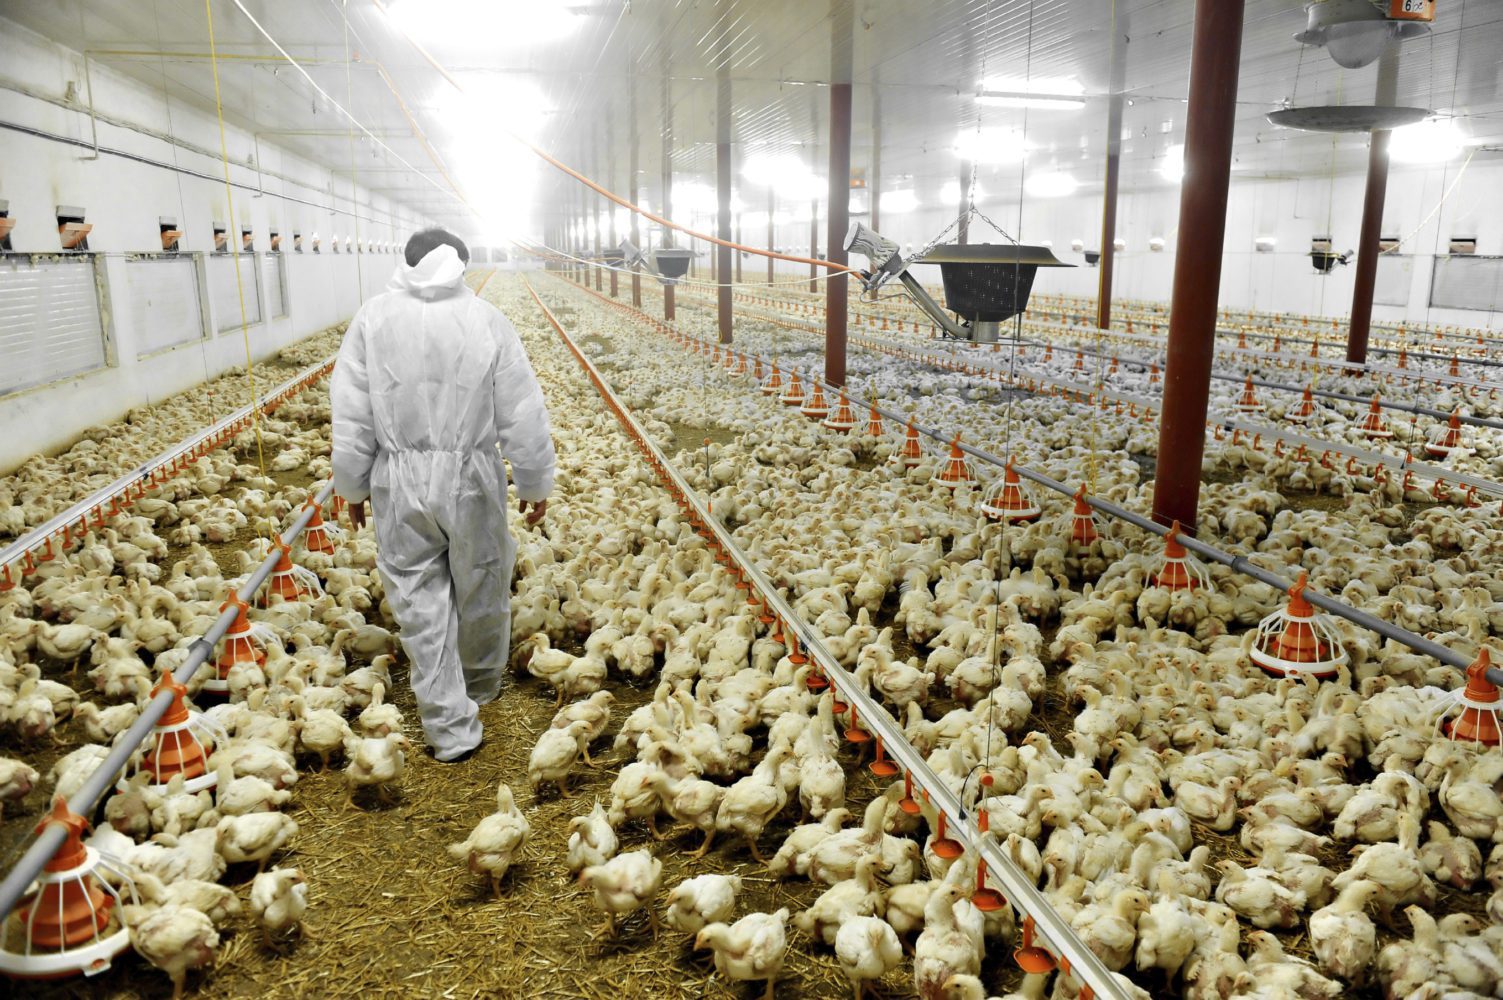 http://healthydebate.ca/wp-content/uploads/2015/02/chicken-farm.jpg